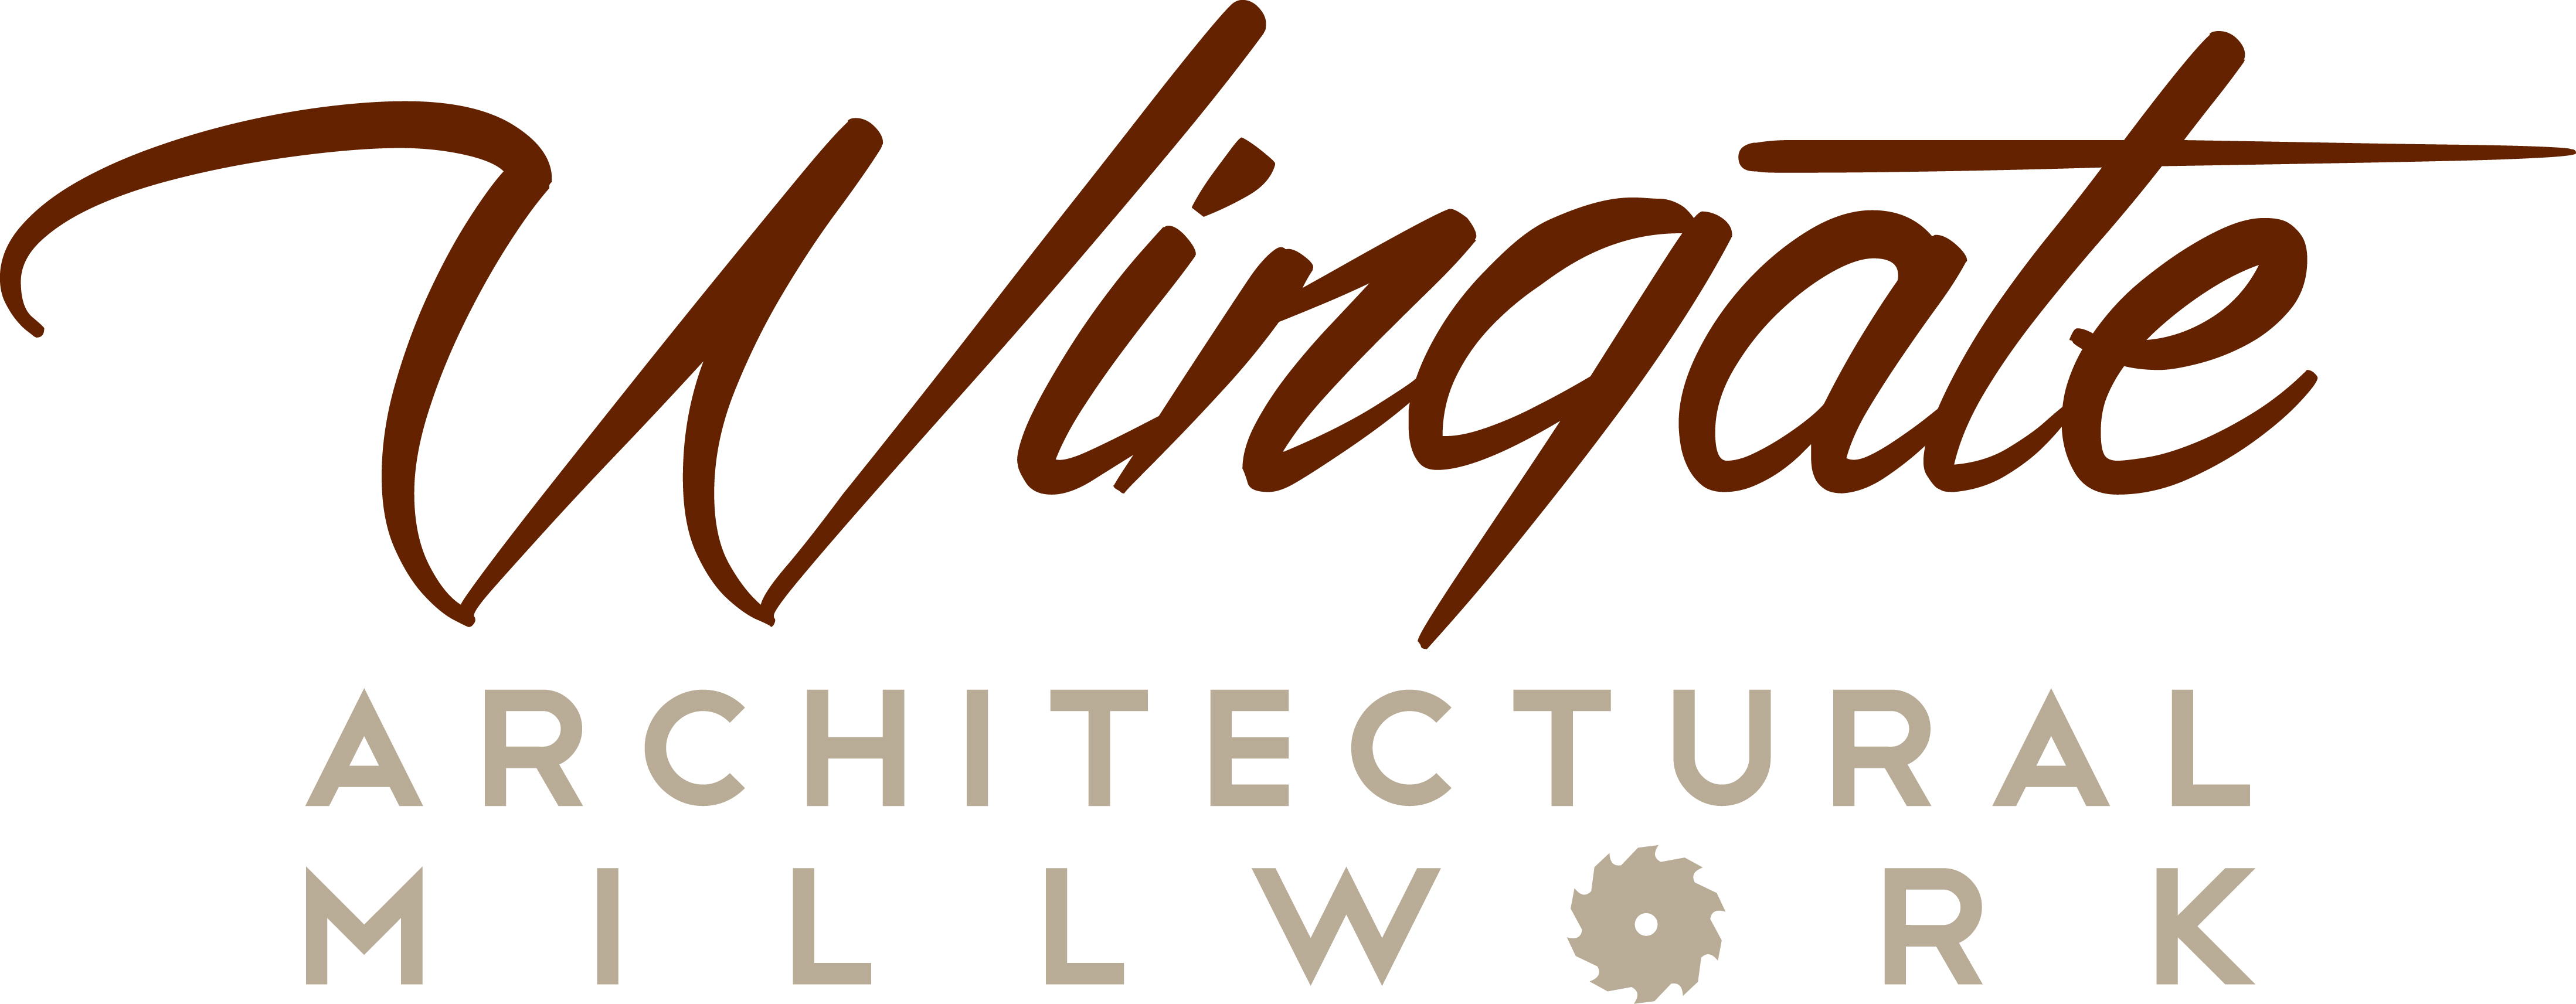 Wingate Architectural Millwork Company Logo